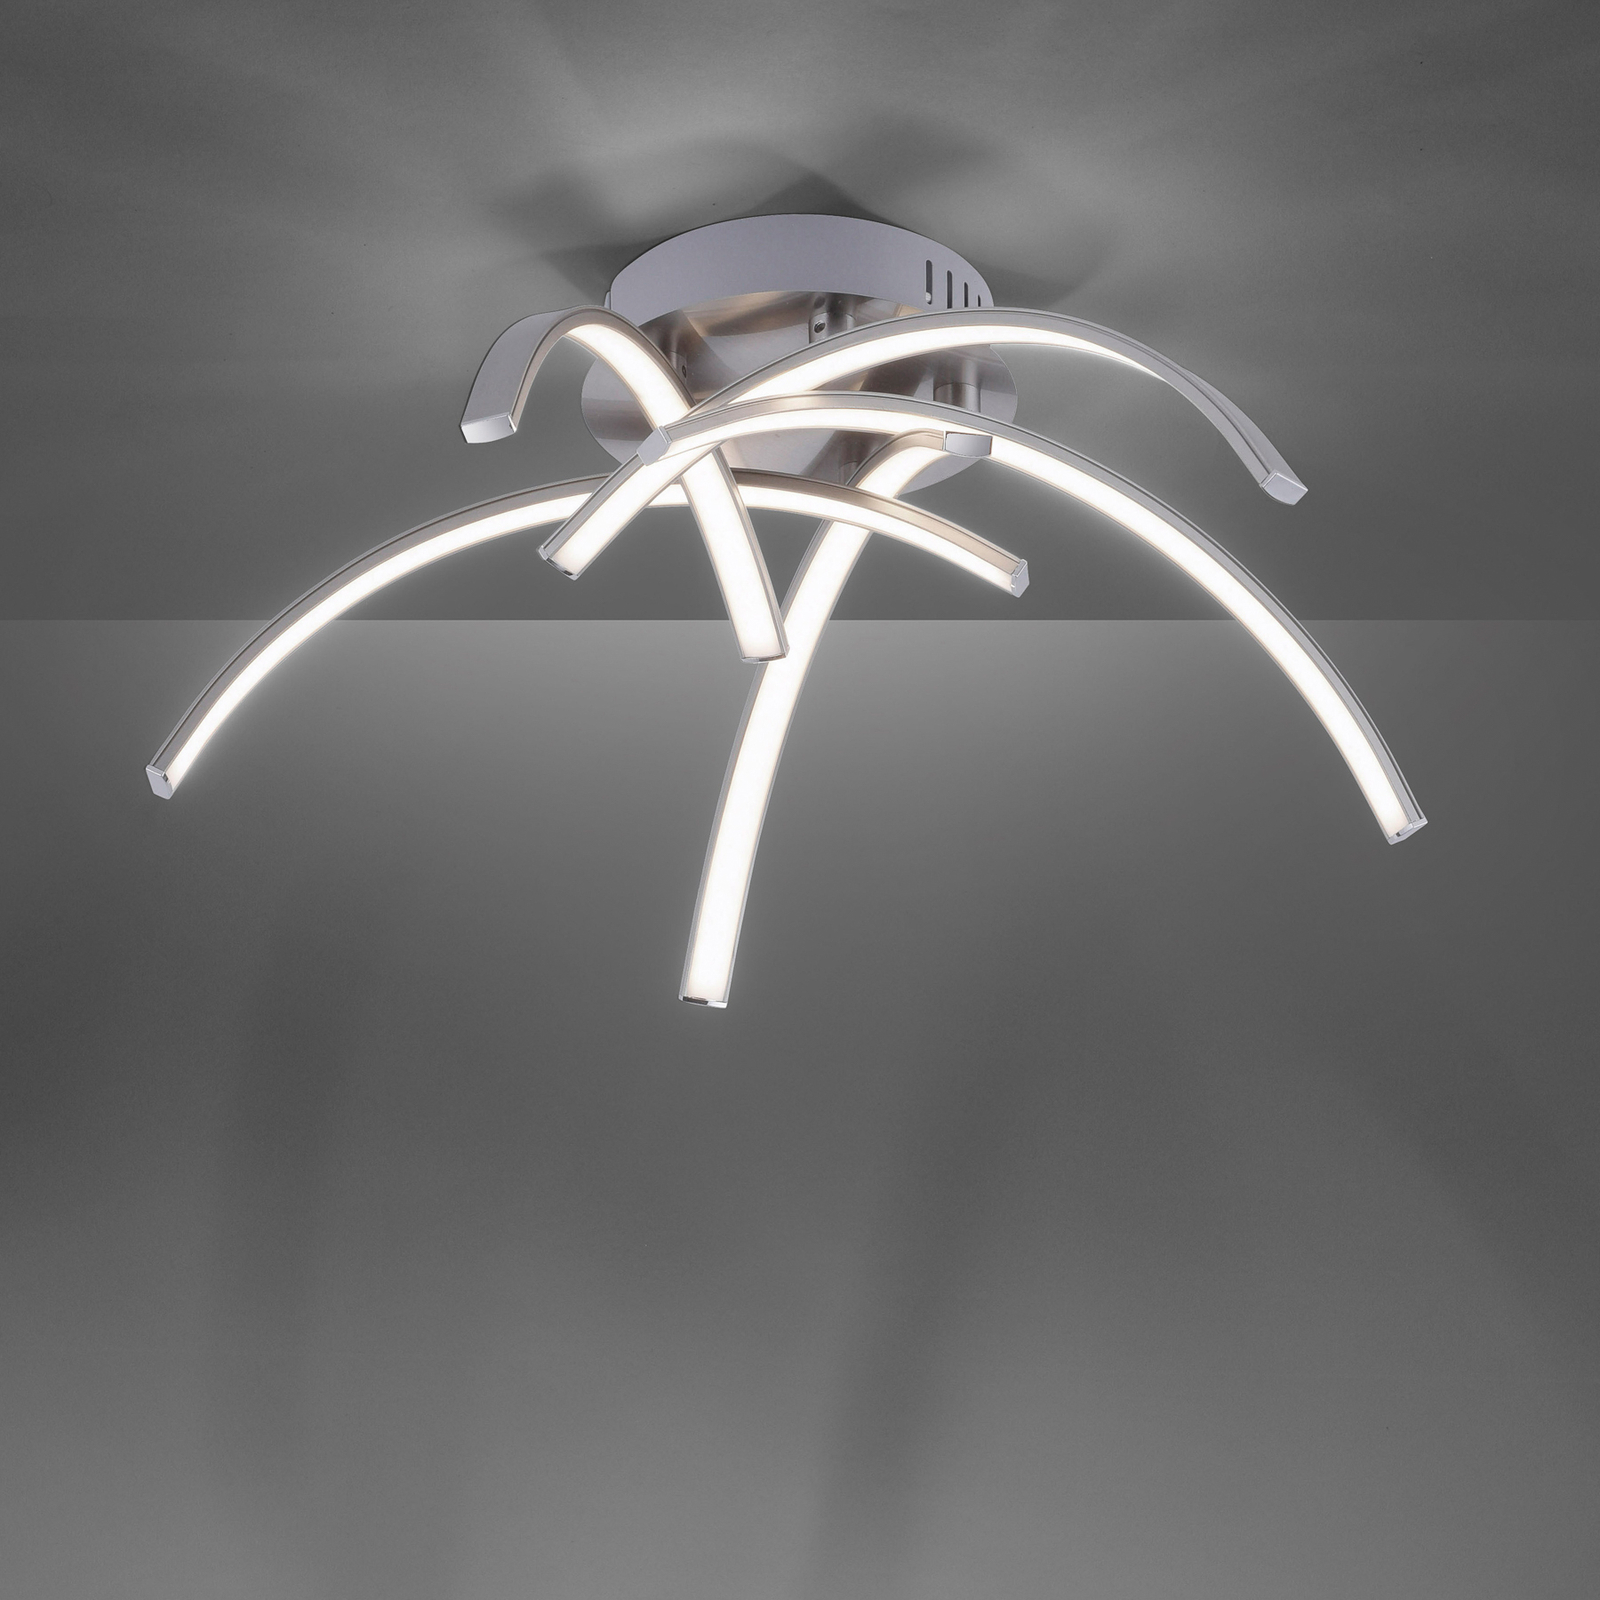 Lampa sufitowa LED Valerie 5-punktowa Ø47cm stalowa